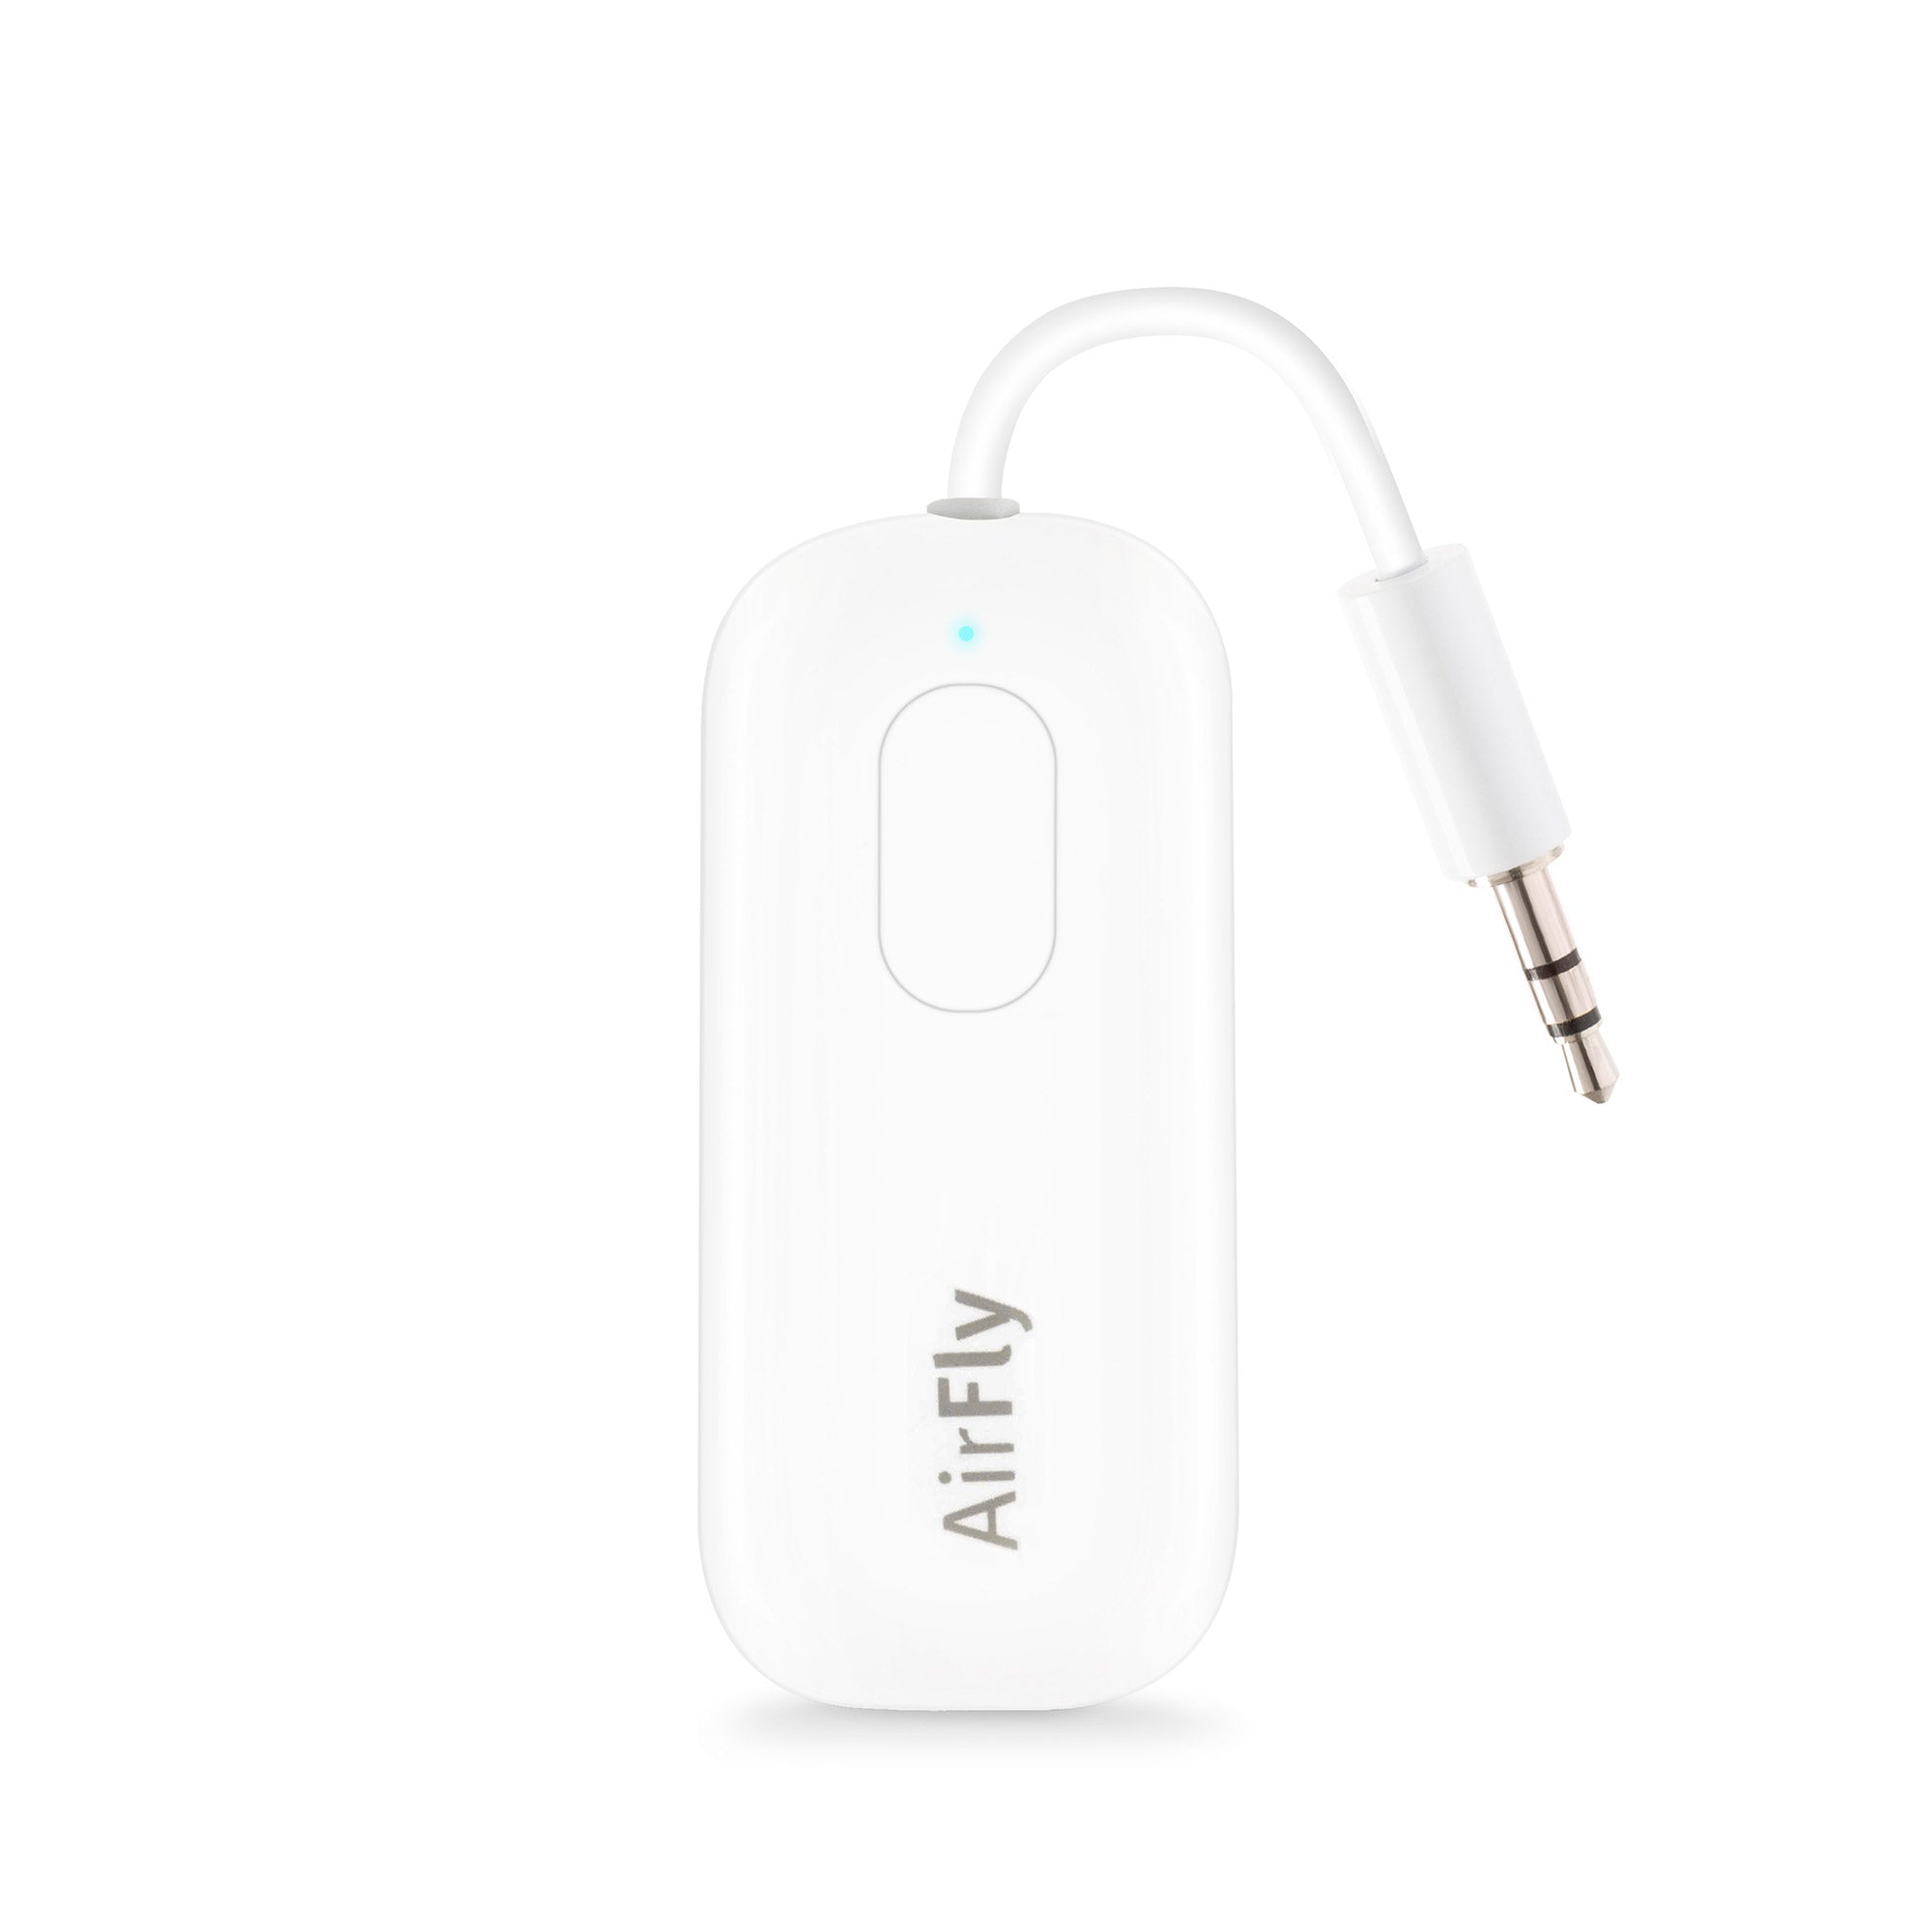 Transform an AUX headphone jack into a Bluetooth Transmitter